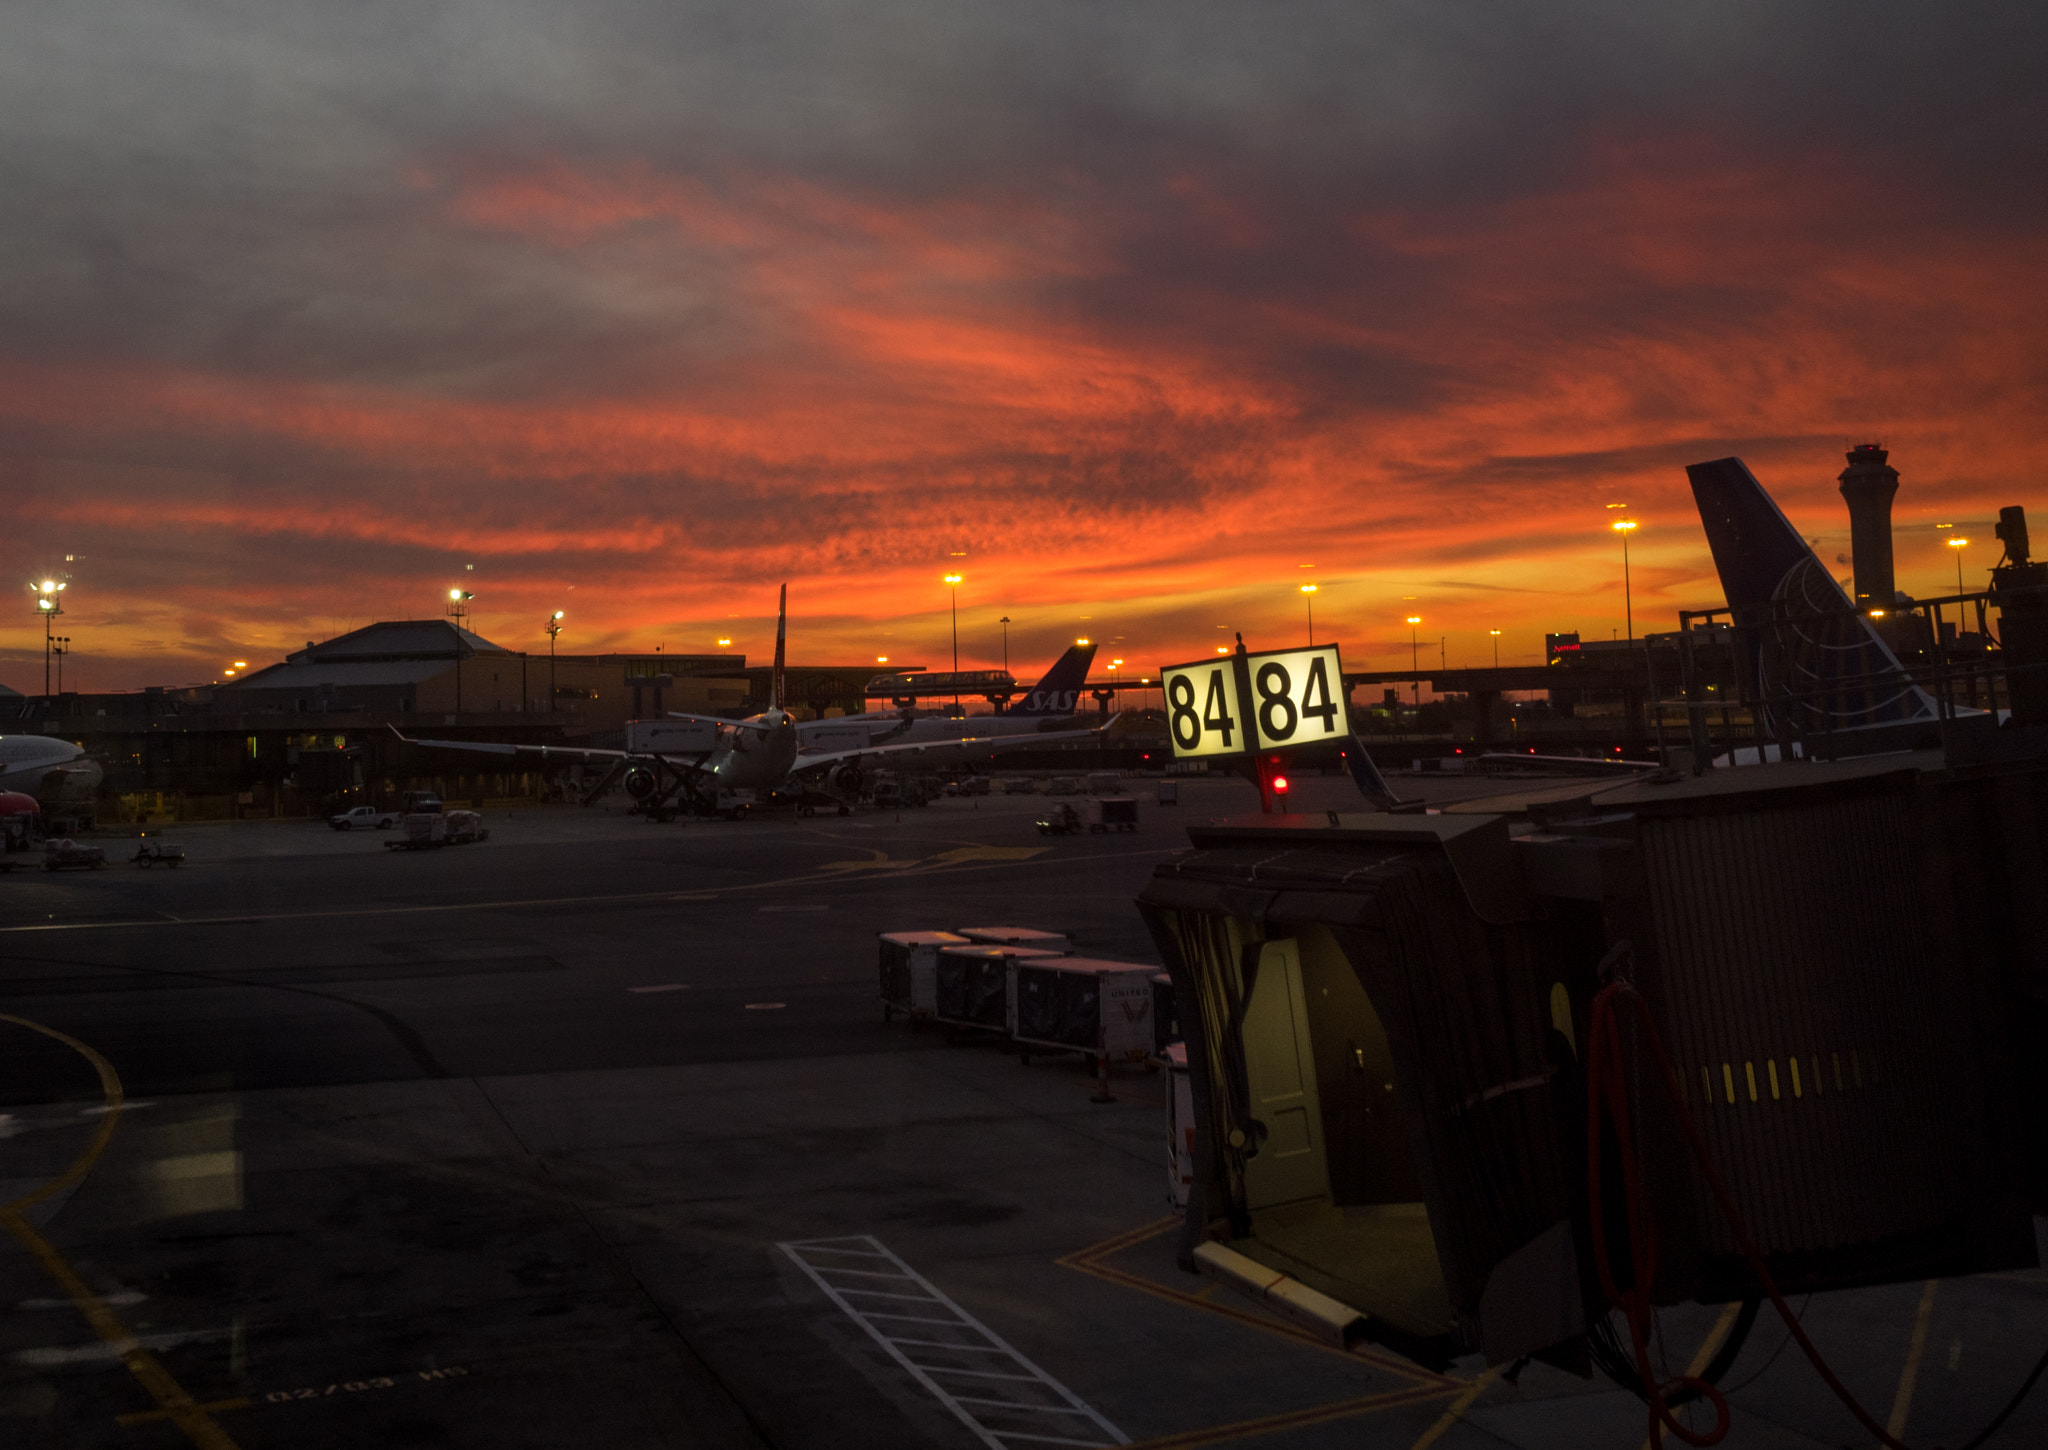 sunset at gate 84